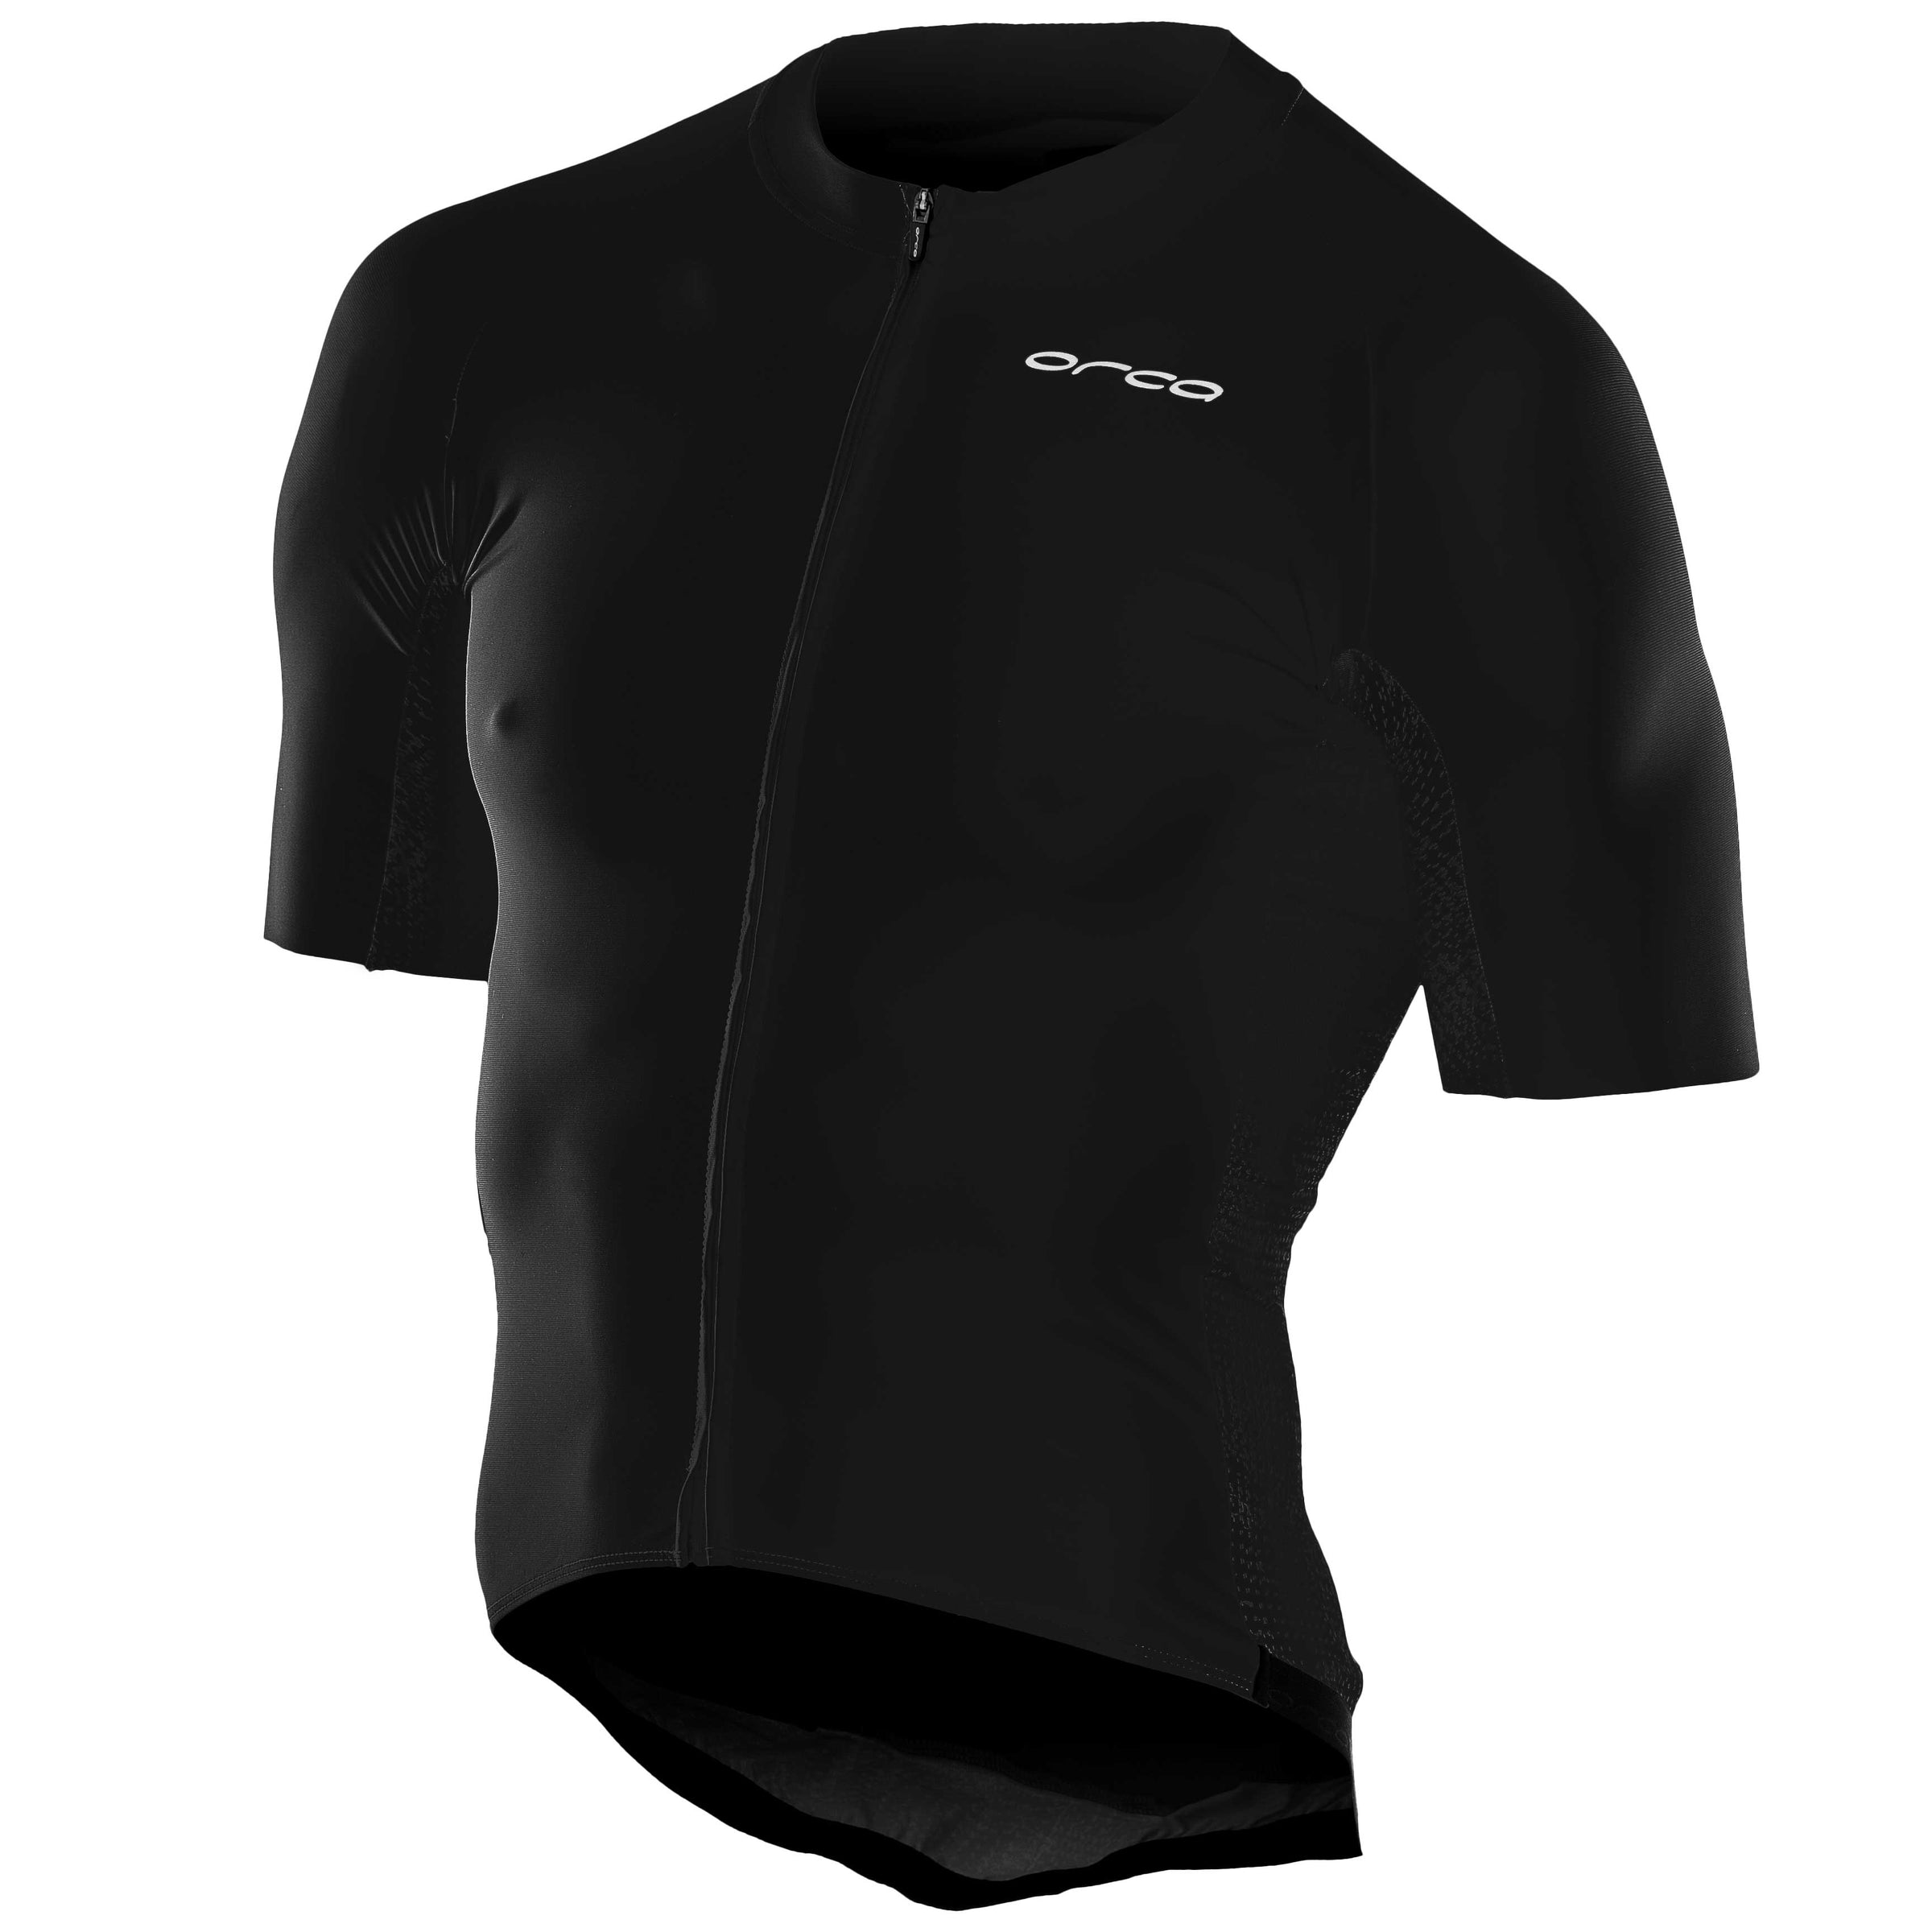 Orca tri top jersey/vest medium – The Extra Mile Outdoor Gear & Bike